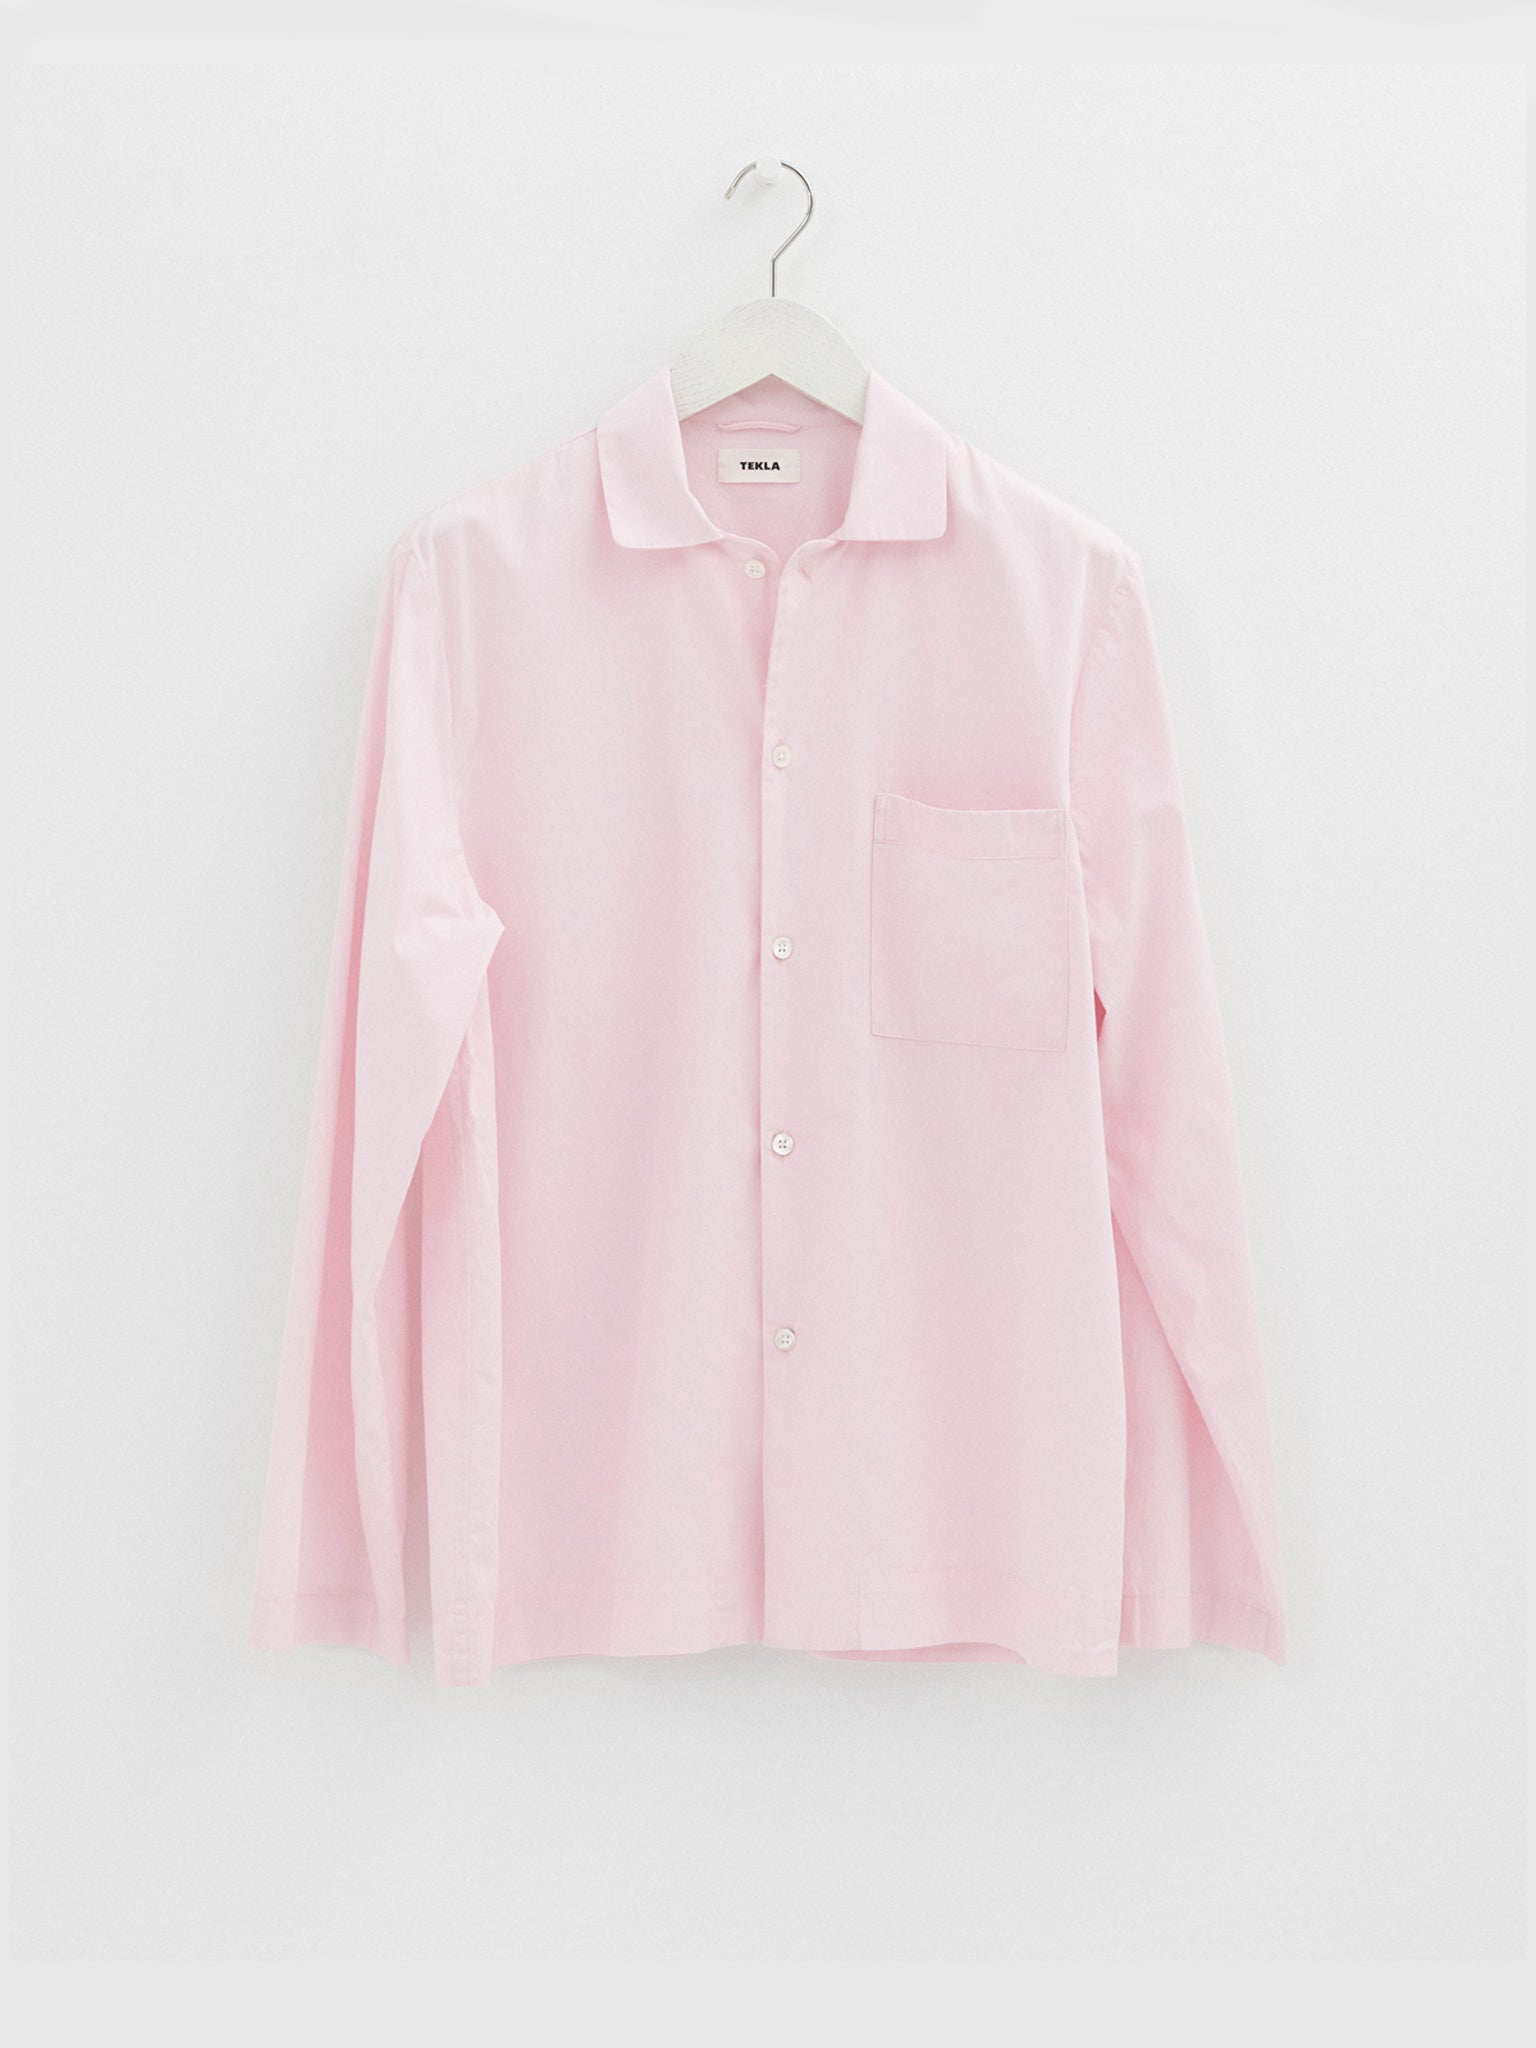 Tekla - Poplin Pyjamas Shirt in Soft Pink